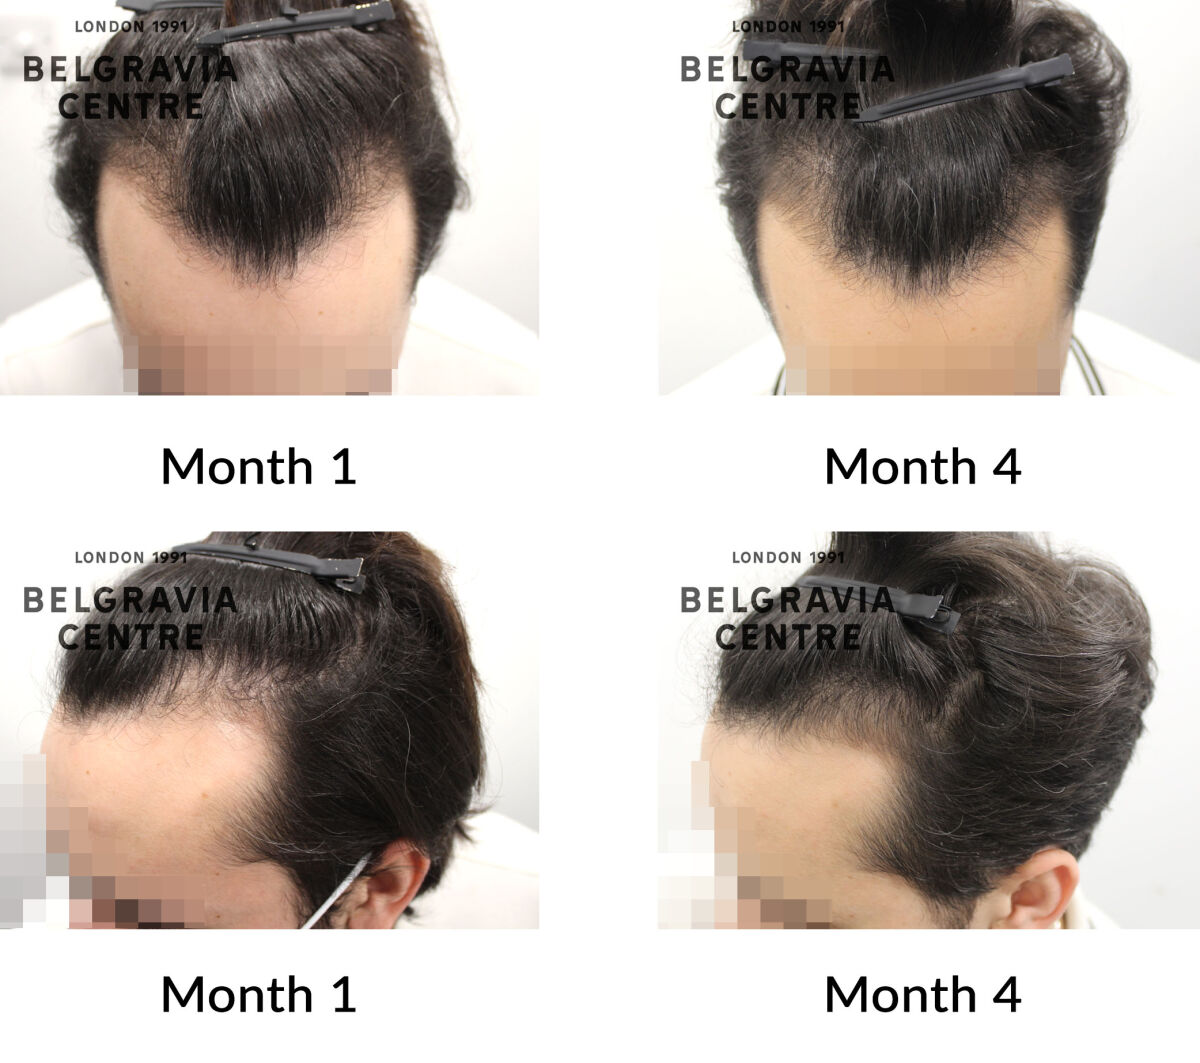 male pattern hair loss the belgravia centre 437186